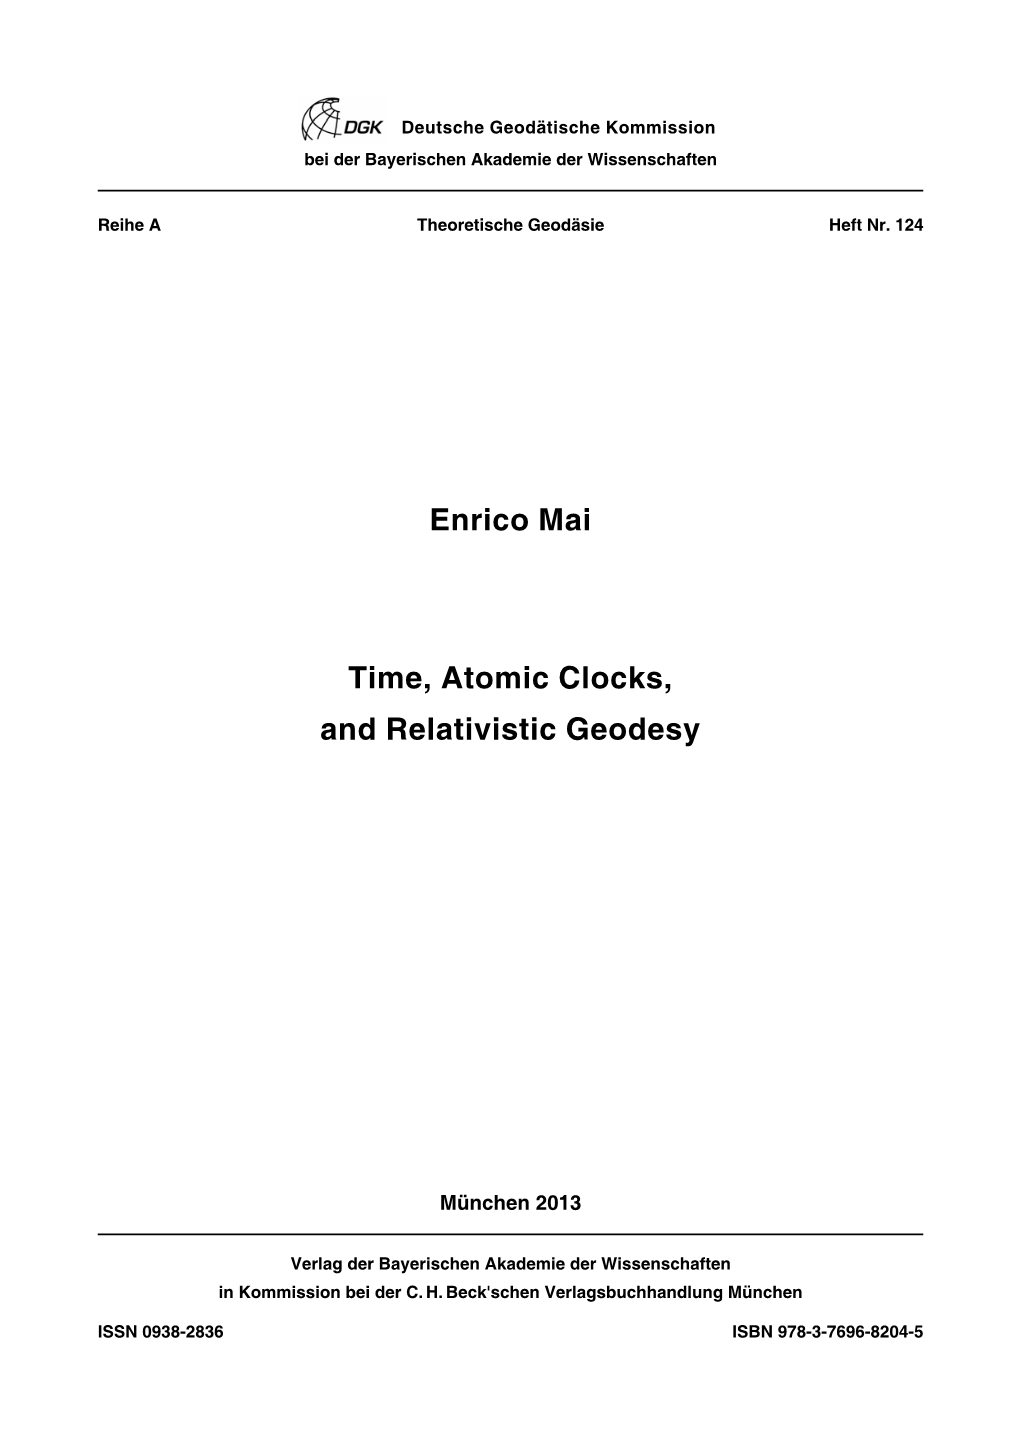 Enrico Mai Time, Atomic Clocks, and Relativistic Geodesy